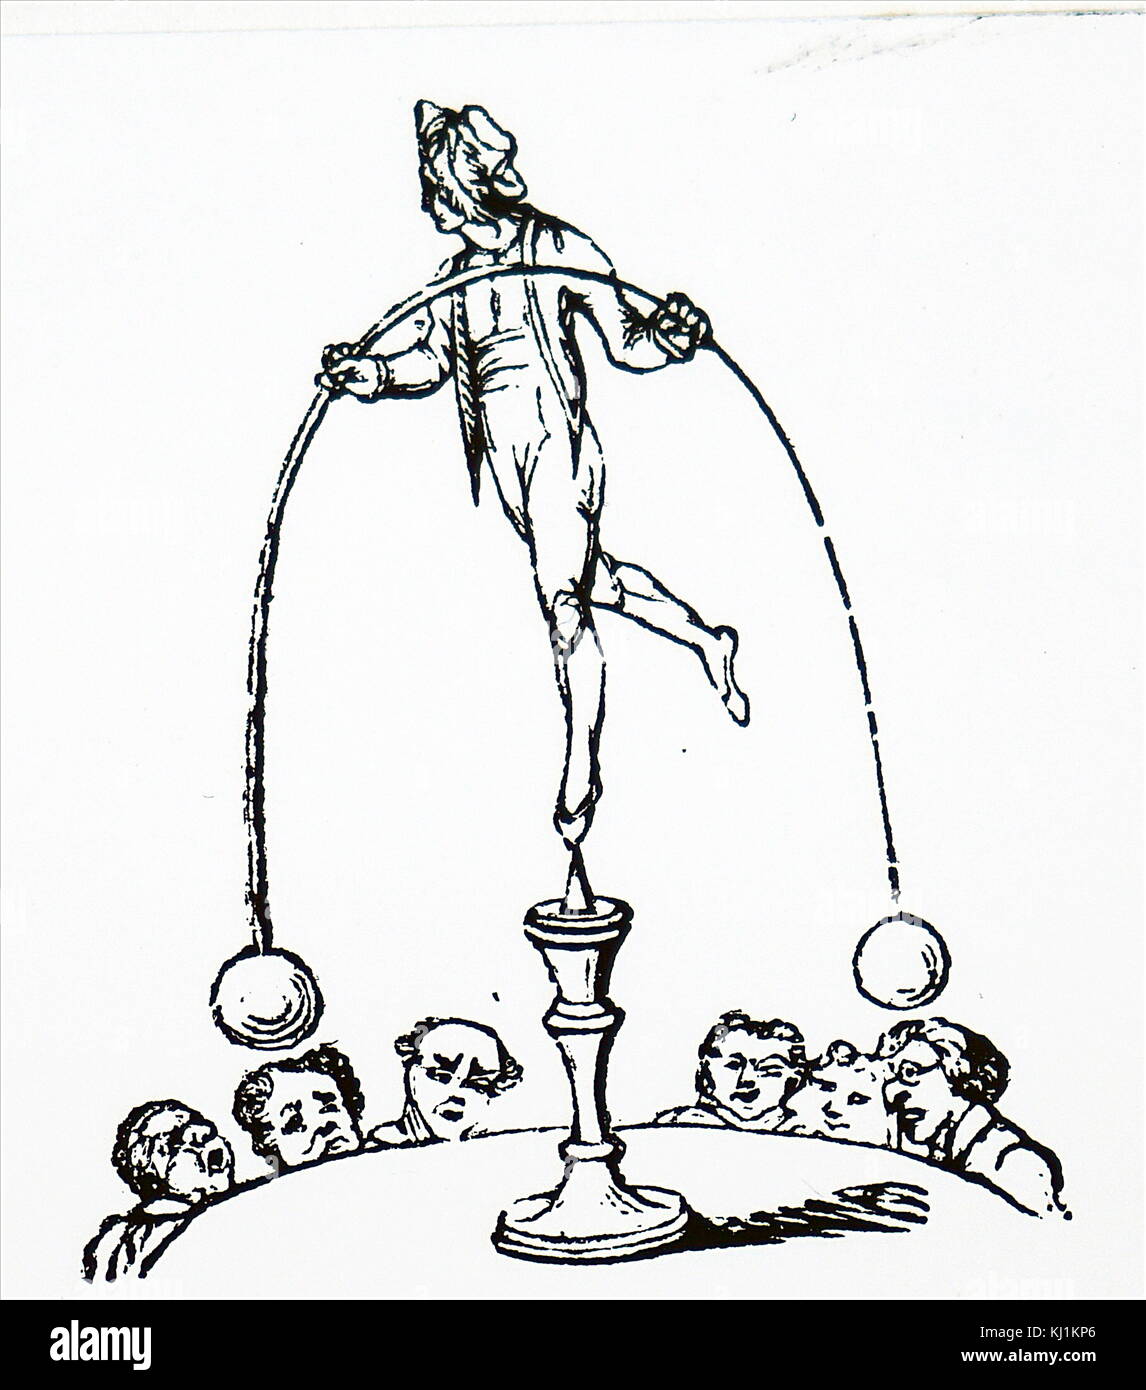 Engraving depicting a circus performer balancing atop a podium. Dated 19th Century Stock Photo